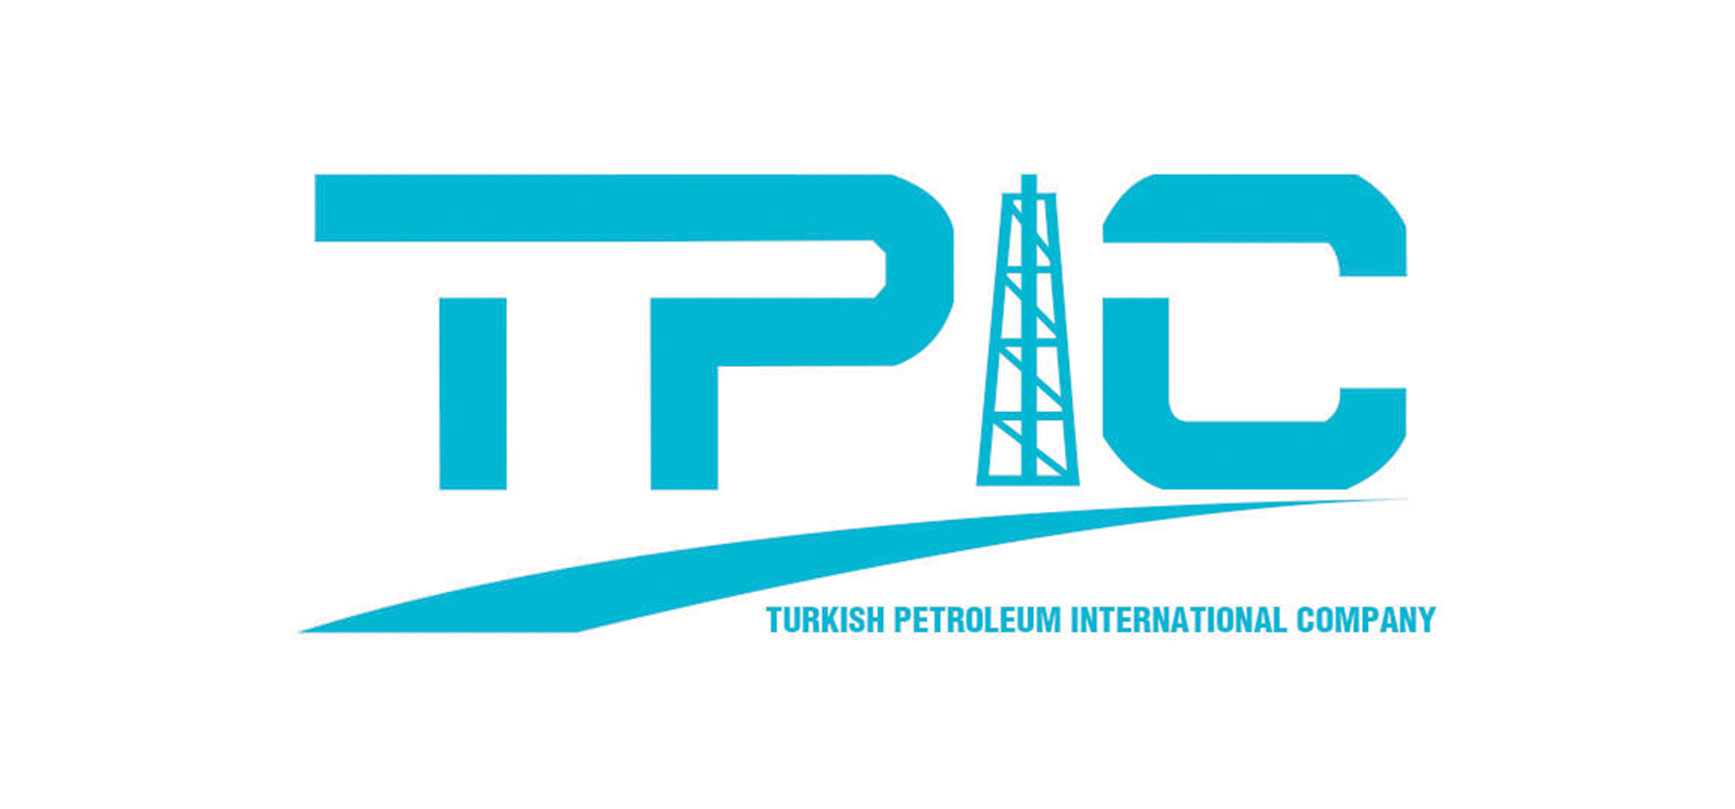 Turkish Petrolium International Company TPIC Turkey